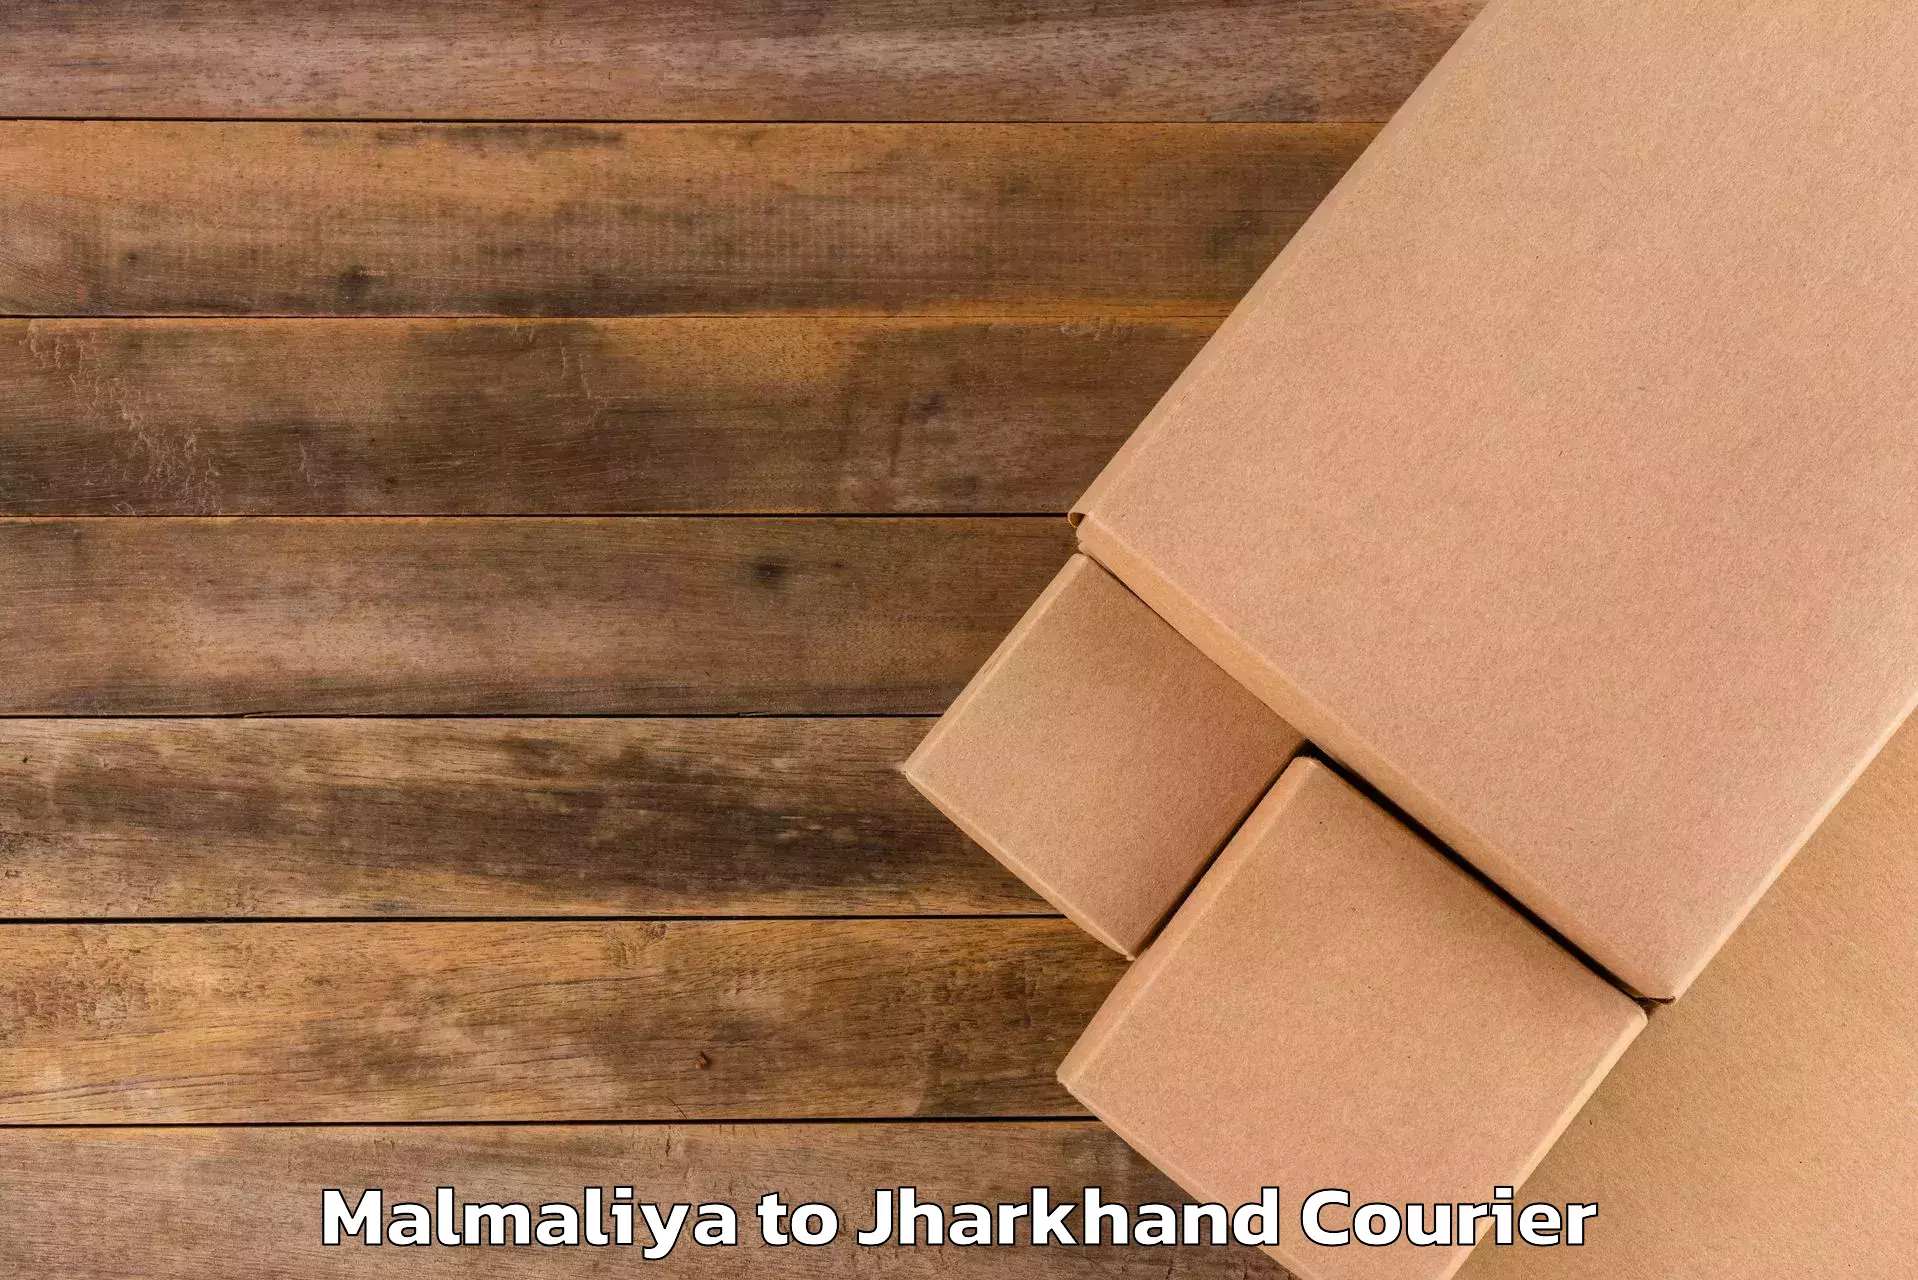 Hassle-free luggage shipping in Malmaliya to Jamshedpur